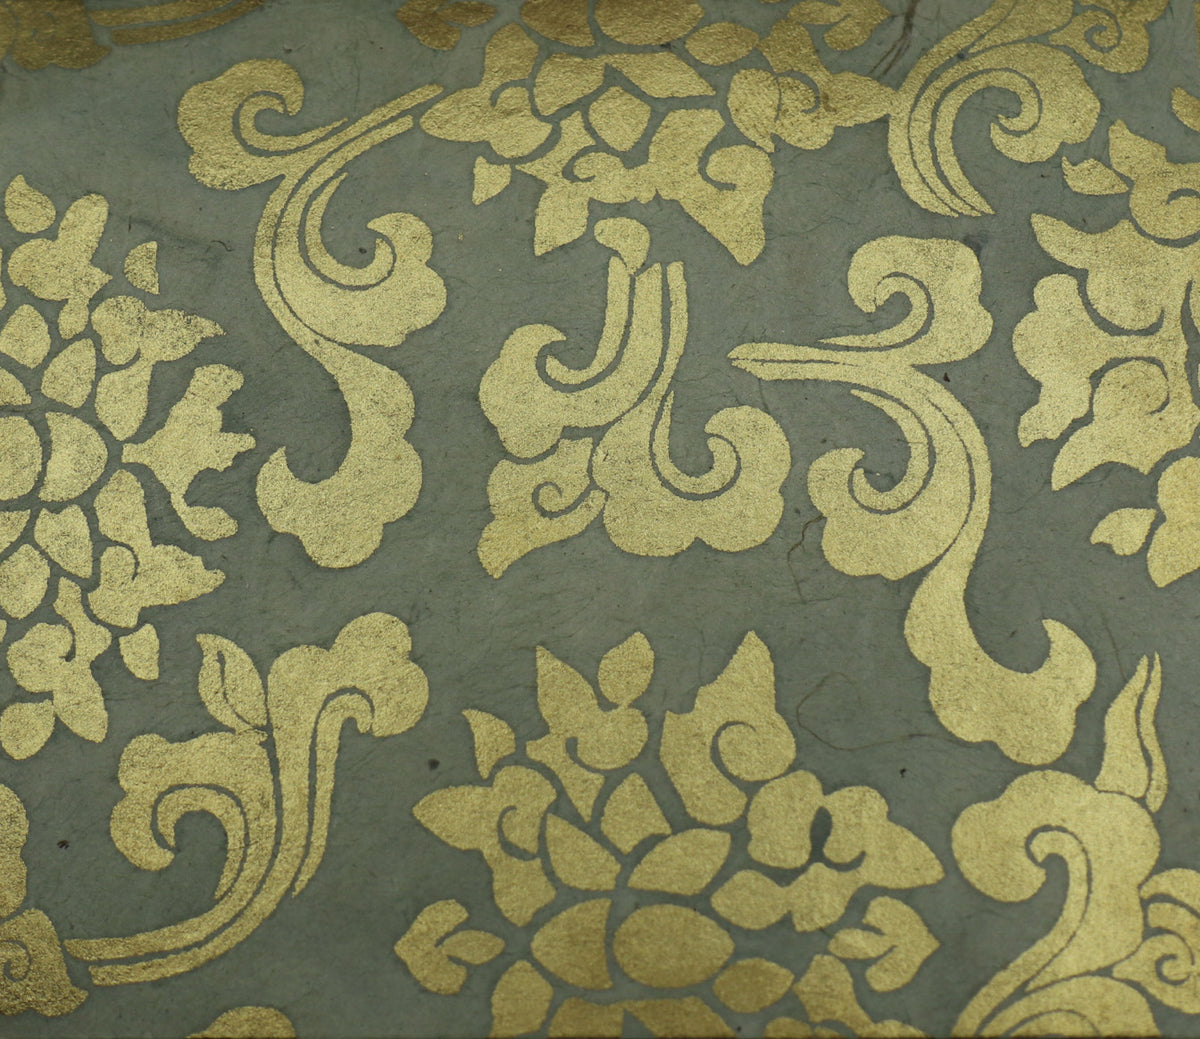 Tibetan Paper &amp; Handicraft - Himalayan Lokta paper - Pema/Tibetan Lotus print - 20x30&quot; (4558769782871)